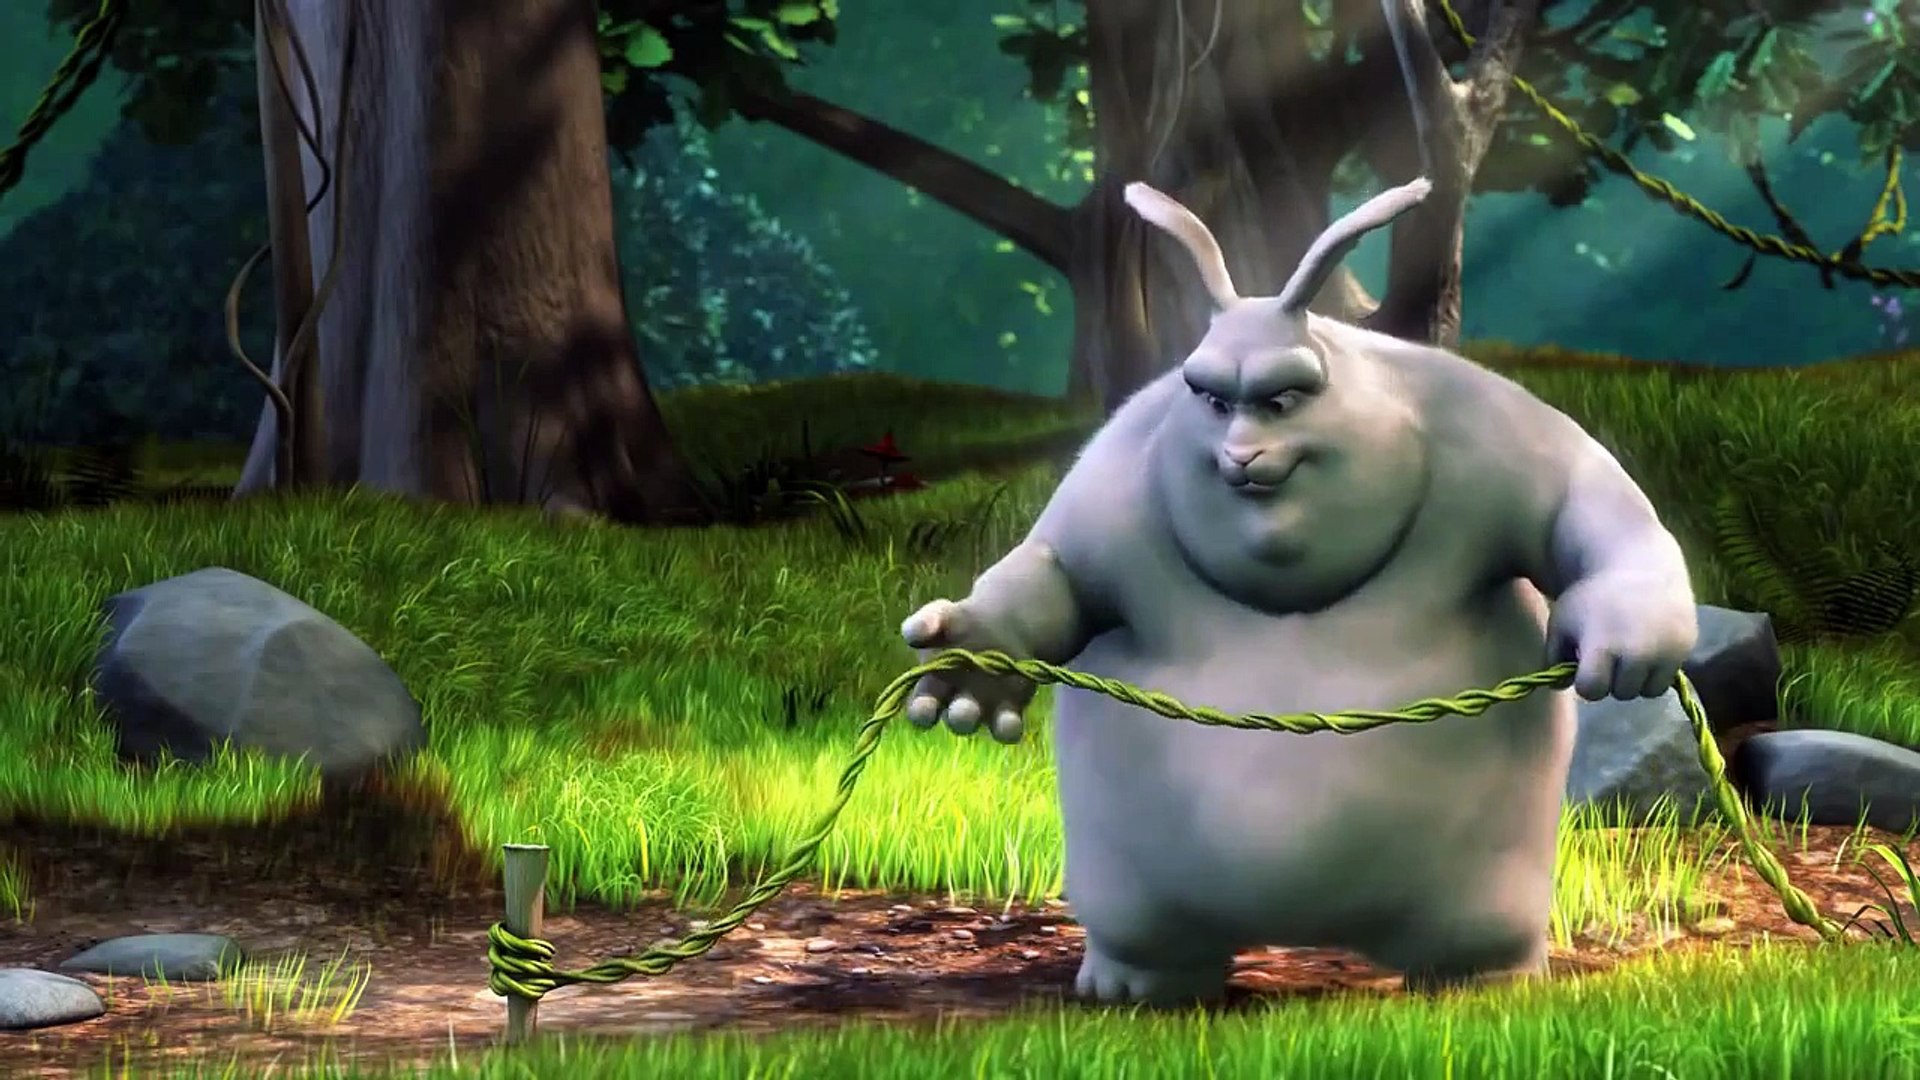 Big Buck Bunny Animated Cartoon for Kids HD - video Dailymotion